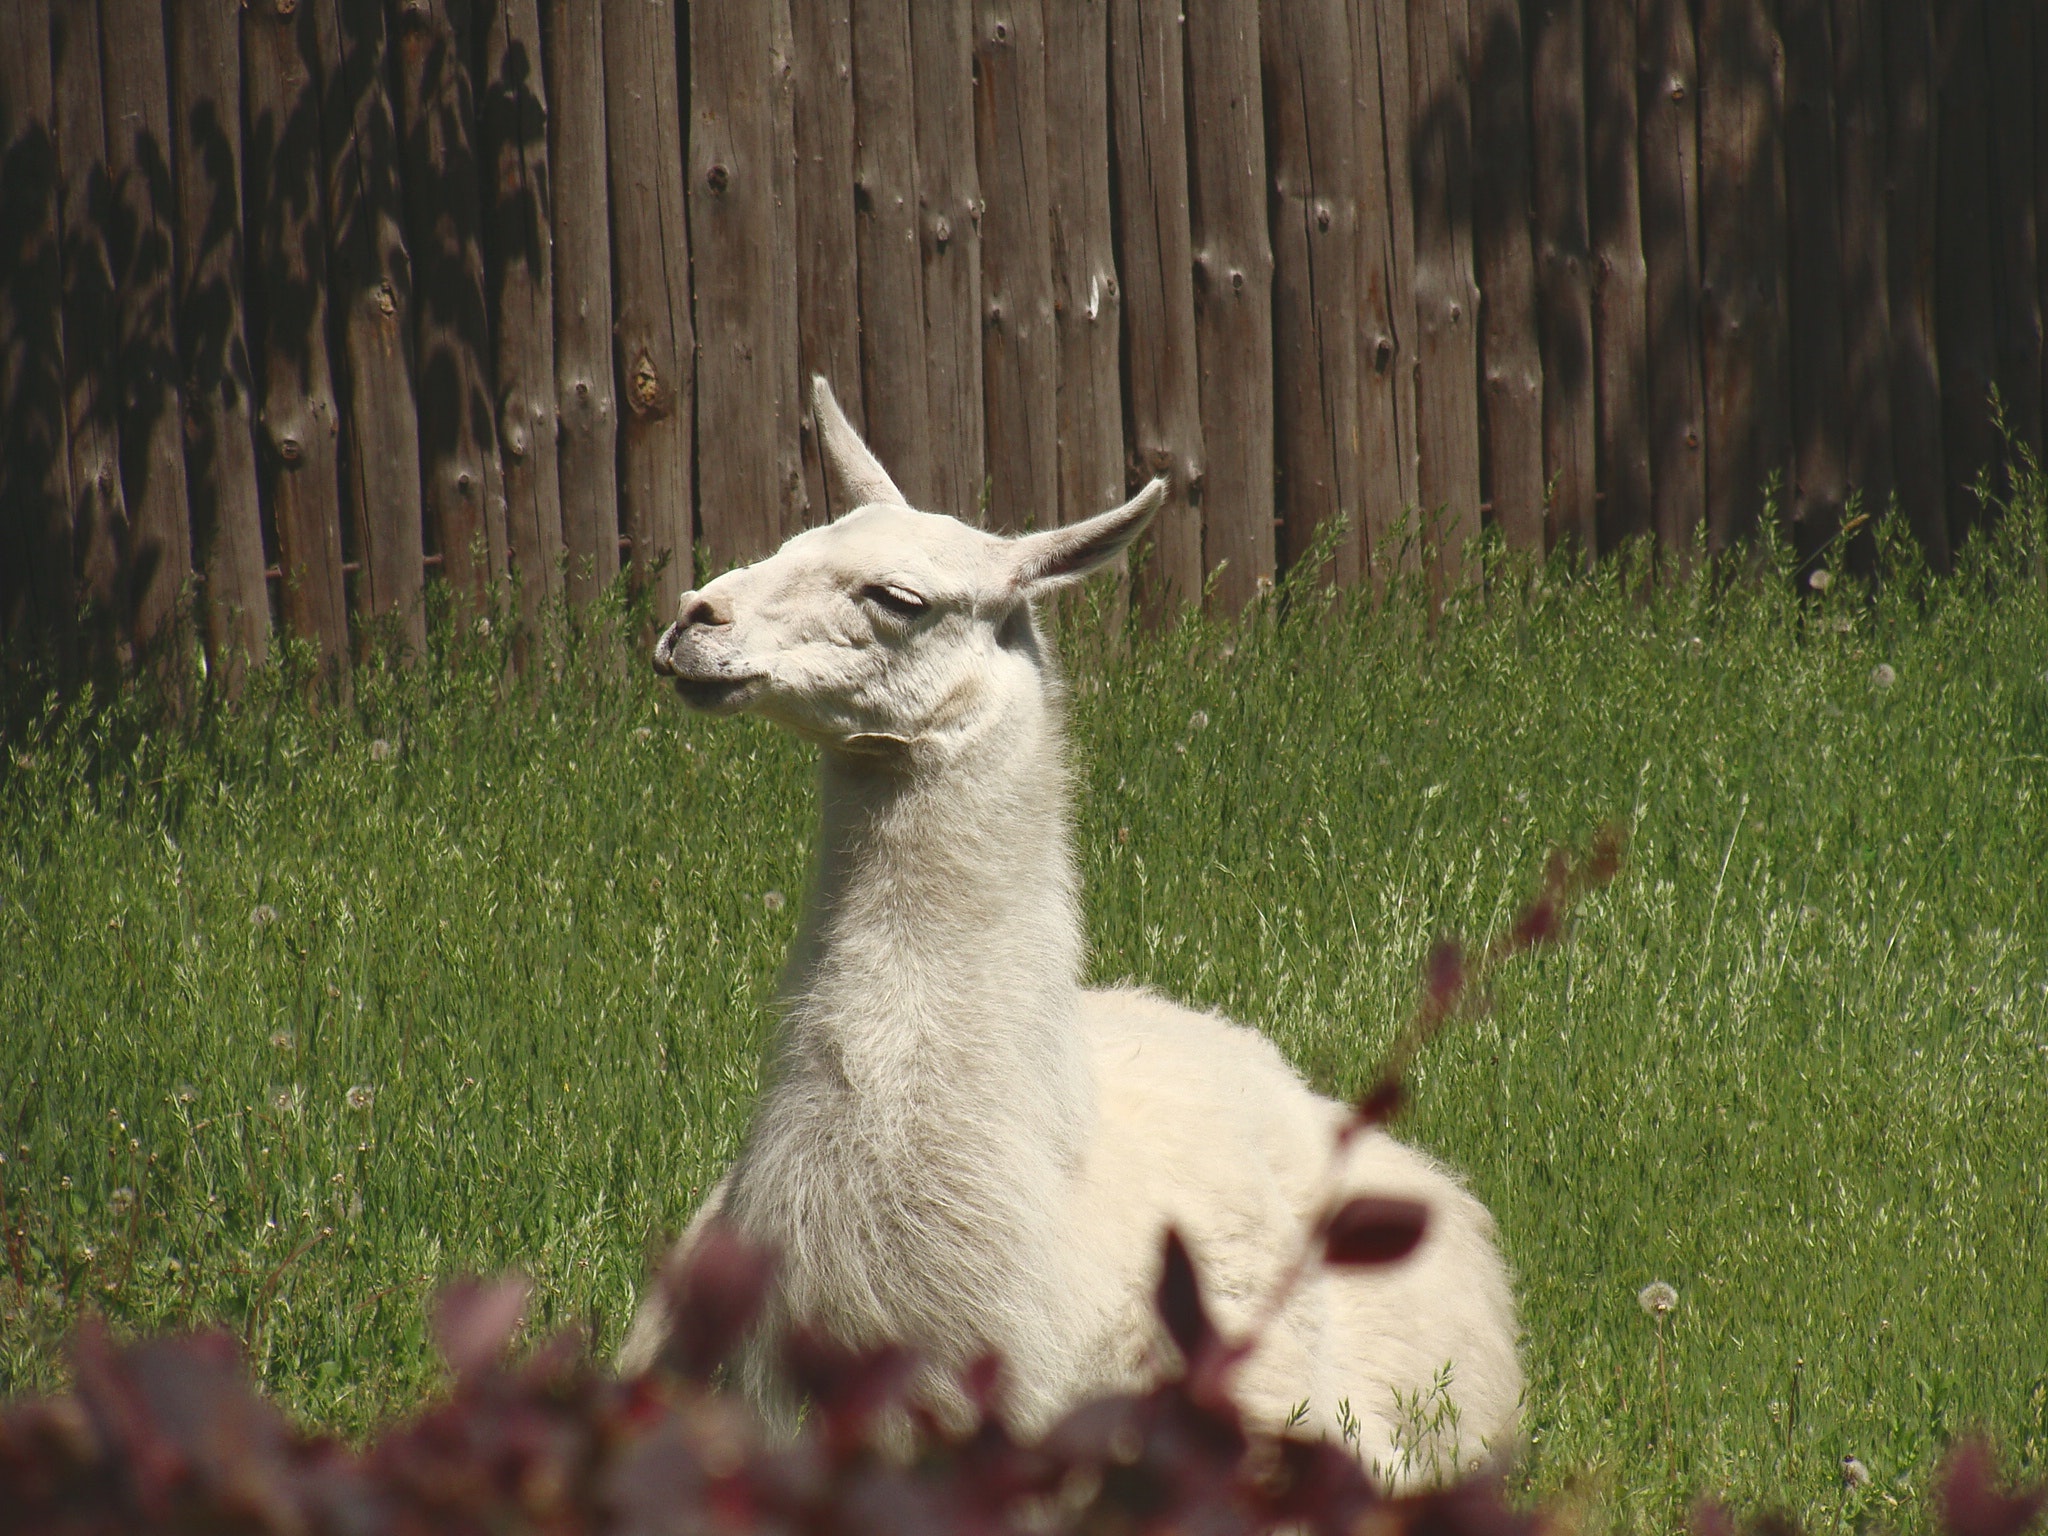 White llama lying on green grass under sunny sky during daytime photo